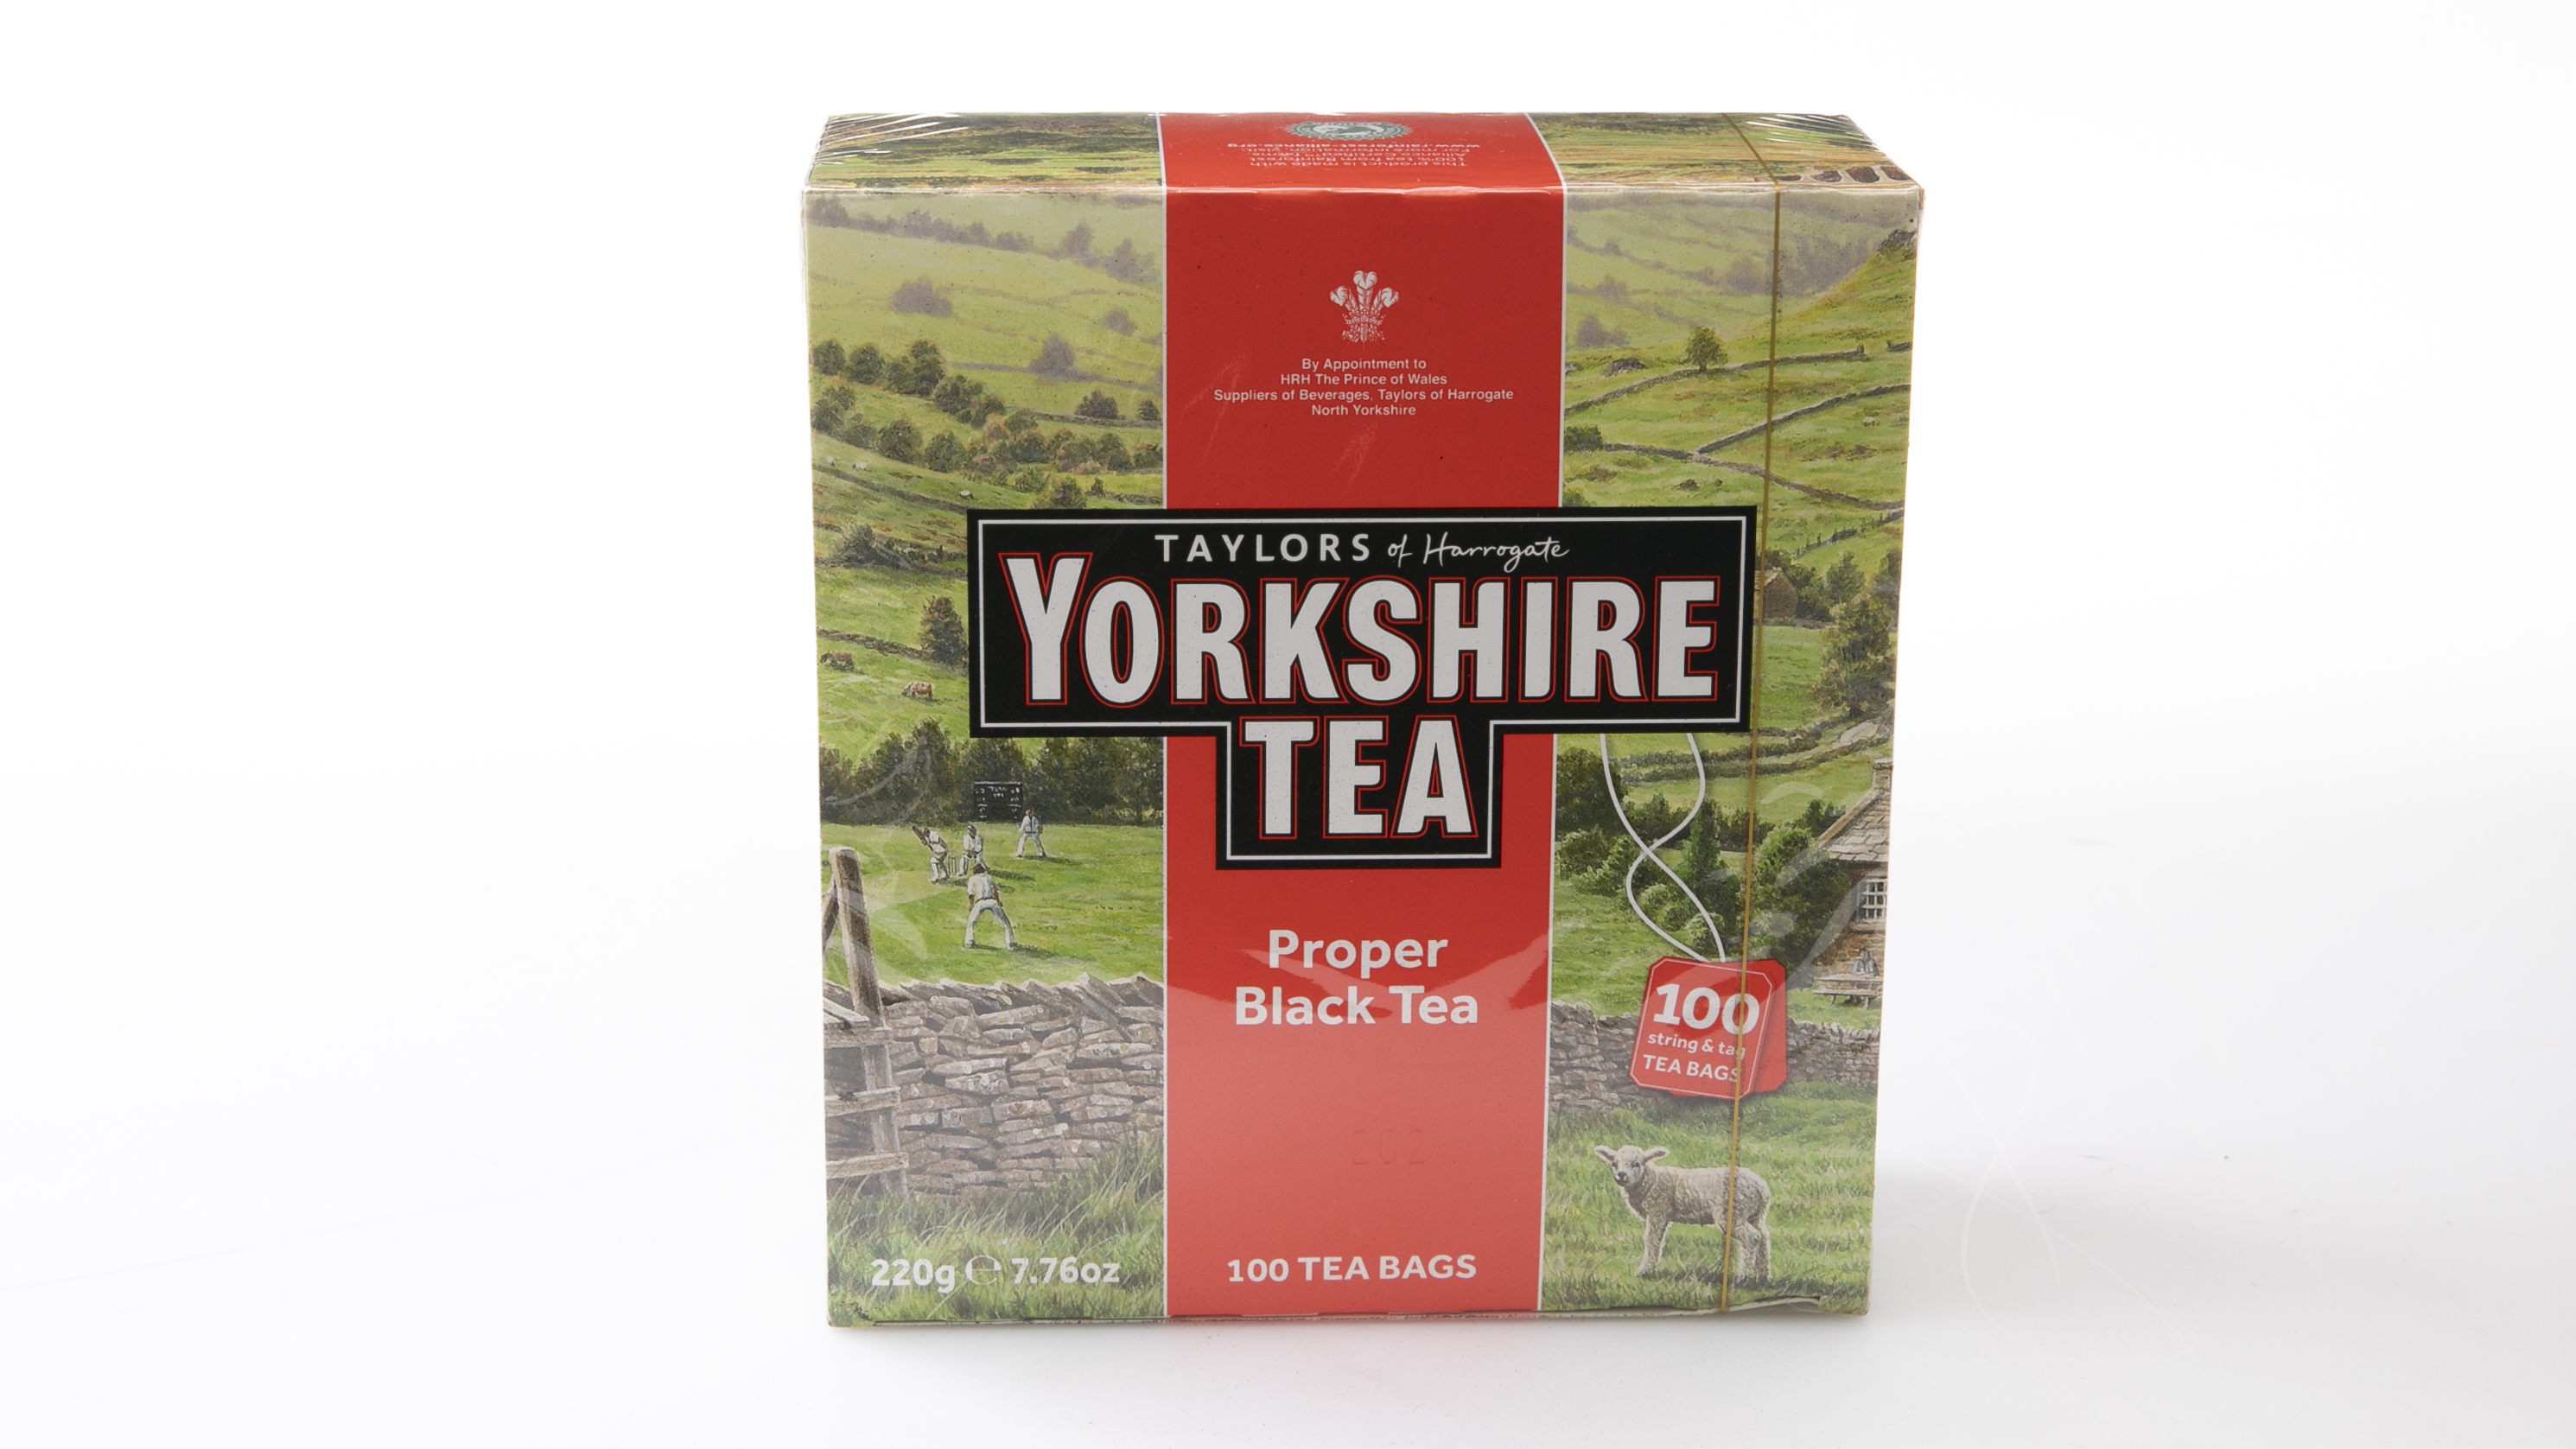 Taylors of Harrogate Yorkshire Tea Proper Black Tea carousel image